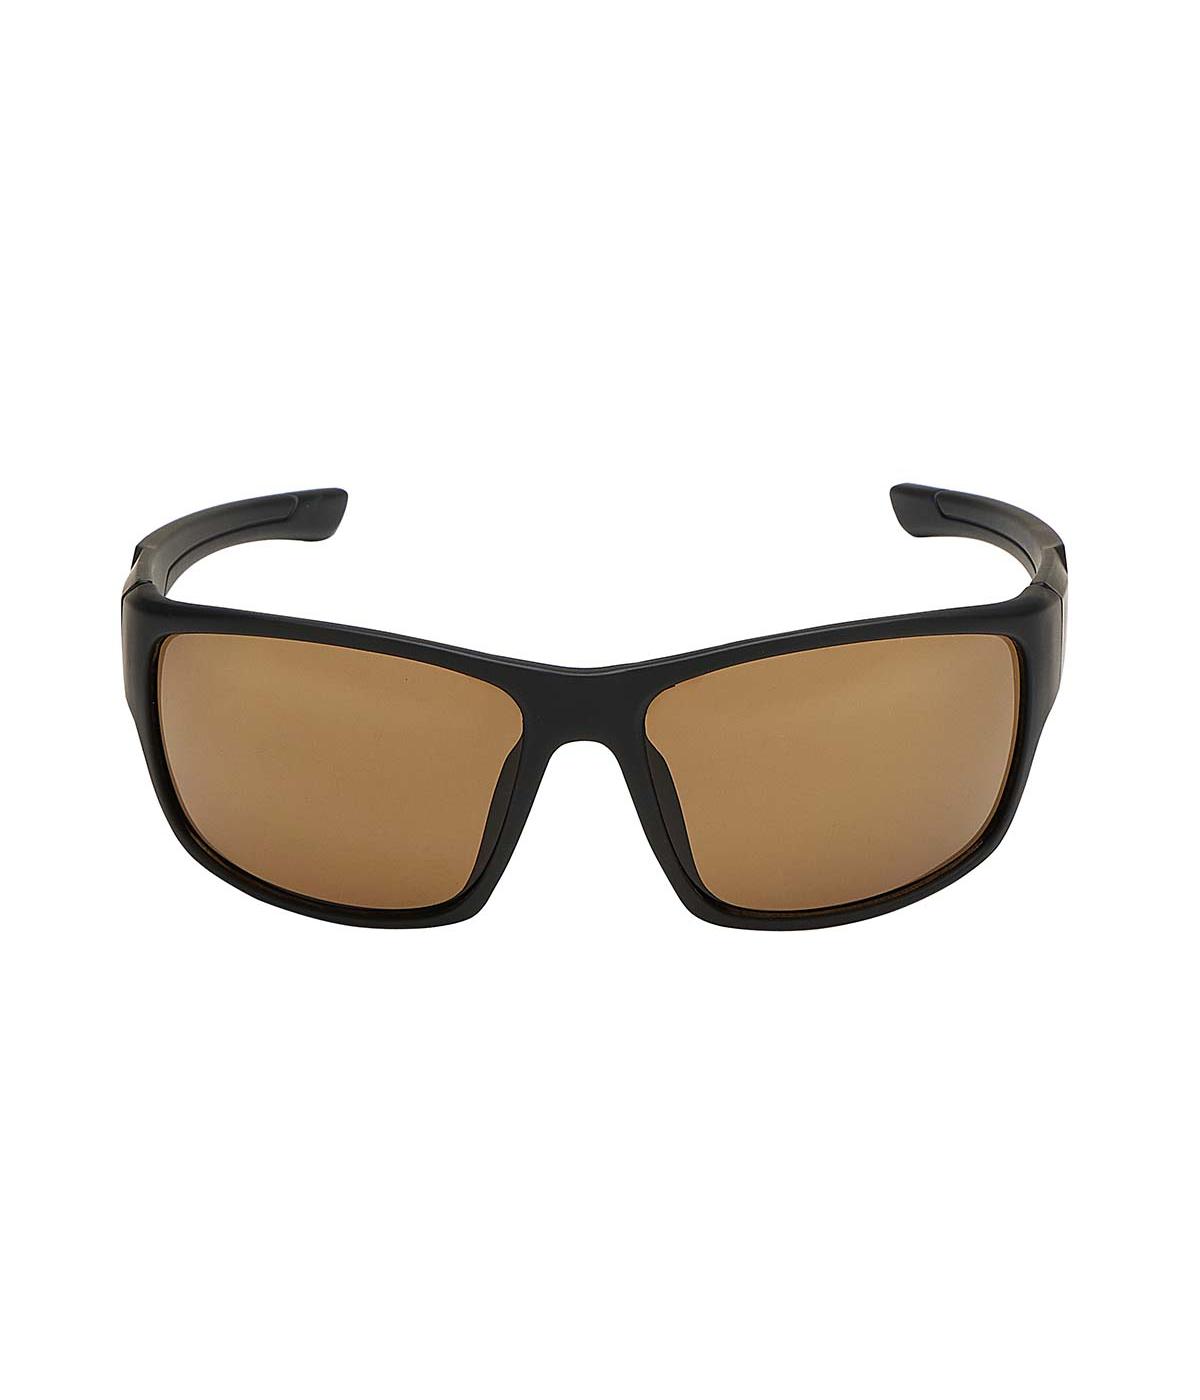 Select A Vision Men's Full Rim Square Black Brown Sunglasses ; image 1 of 2